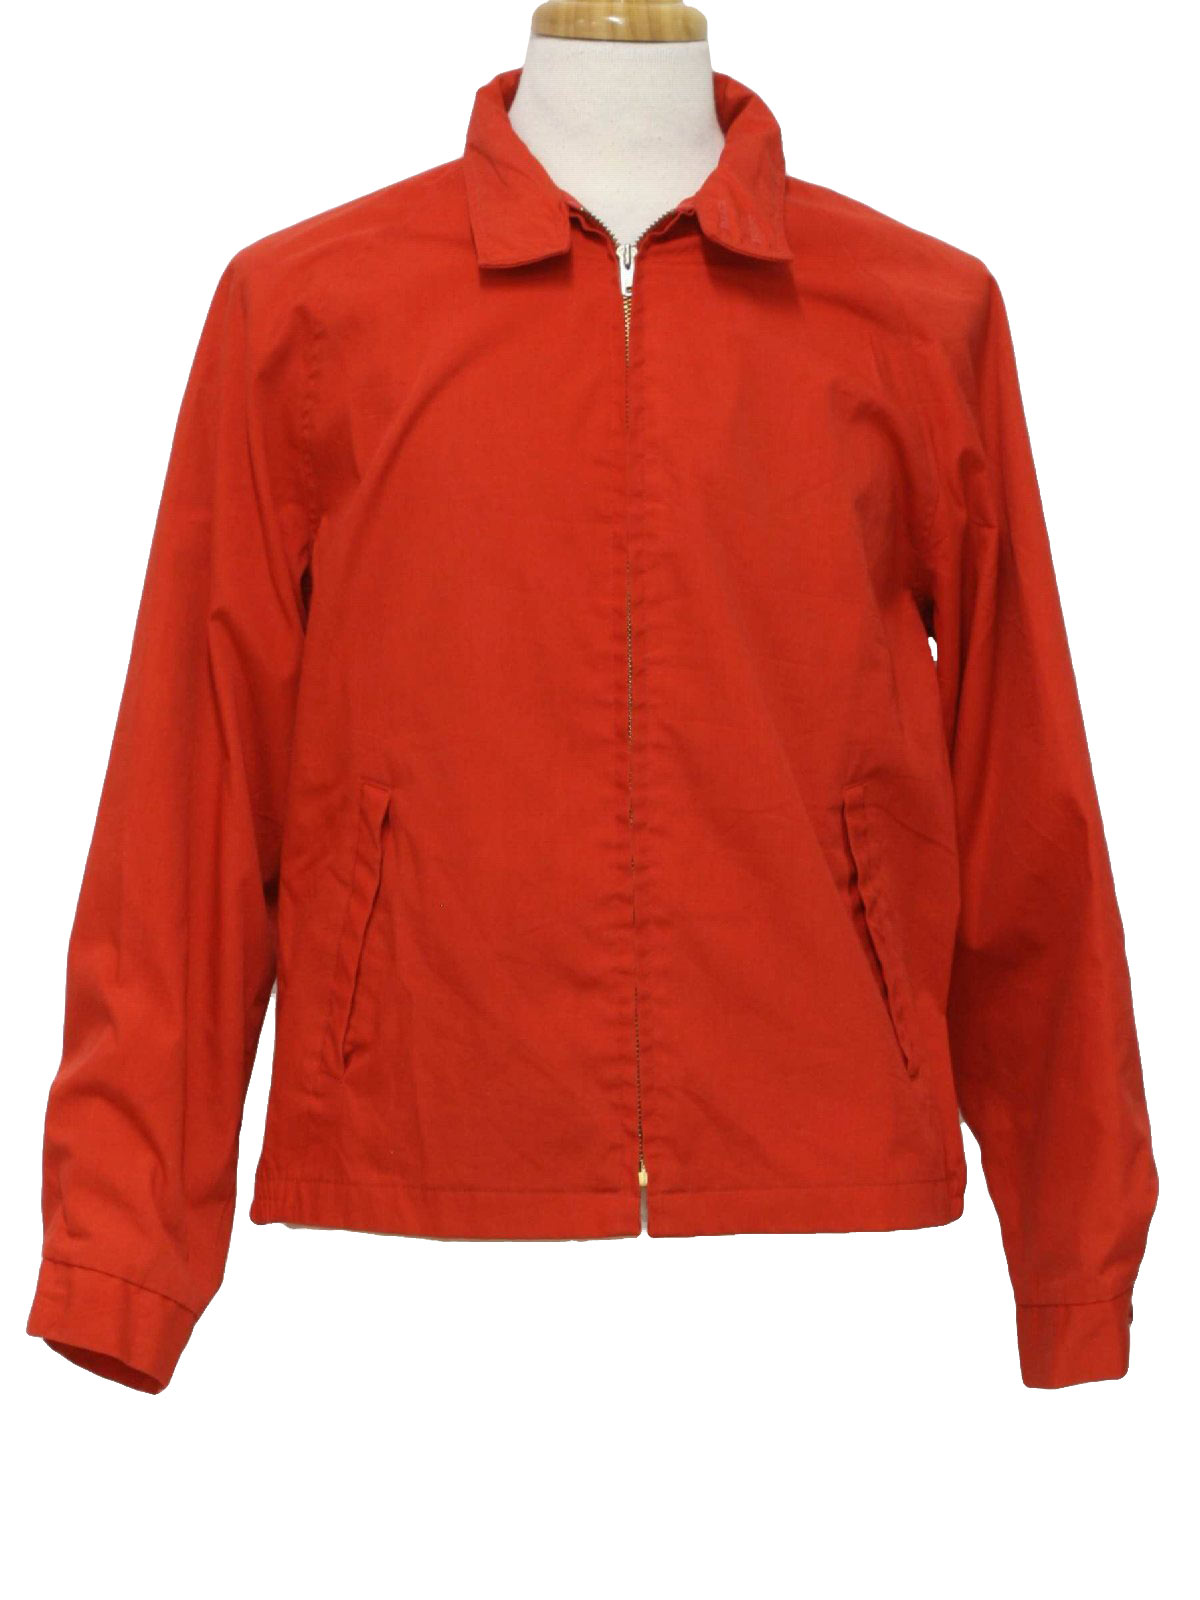 Retro 1960's Jacket (Campus) : 60s -Campus- Mens red dacron cotton ...